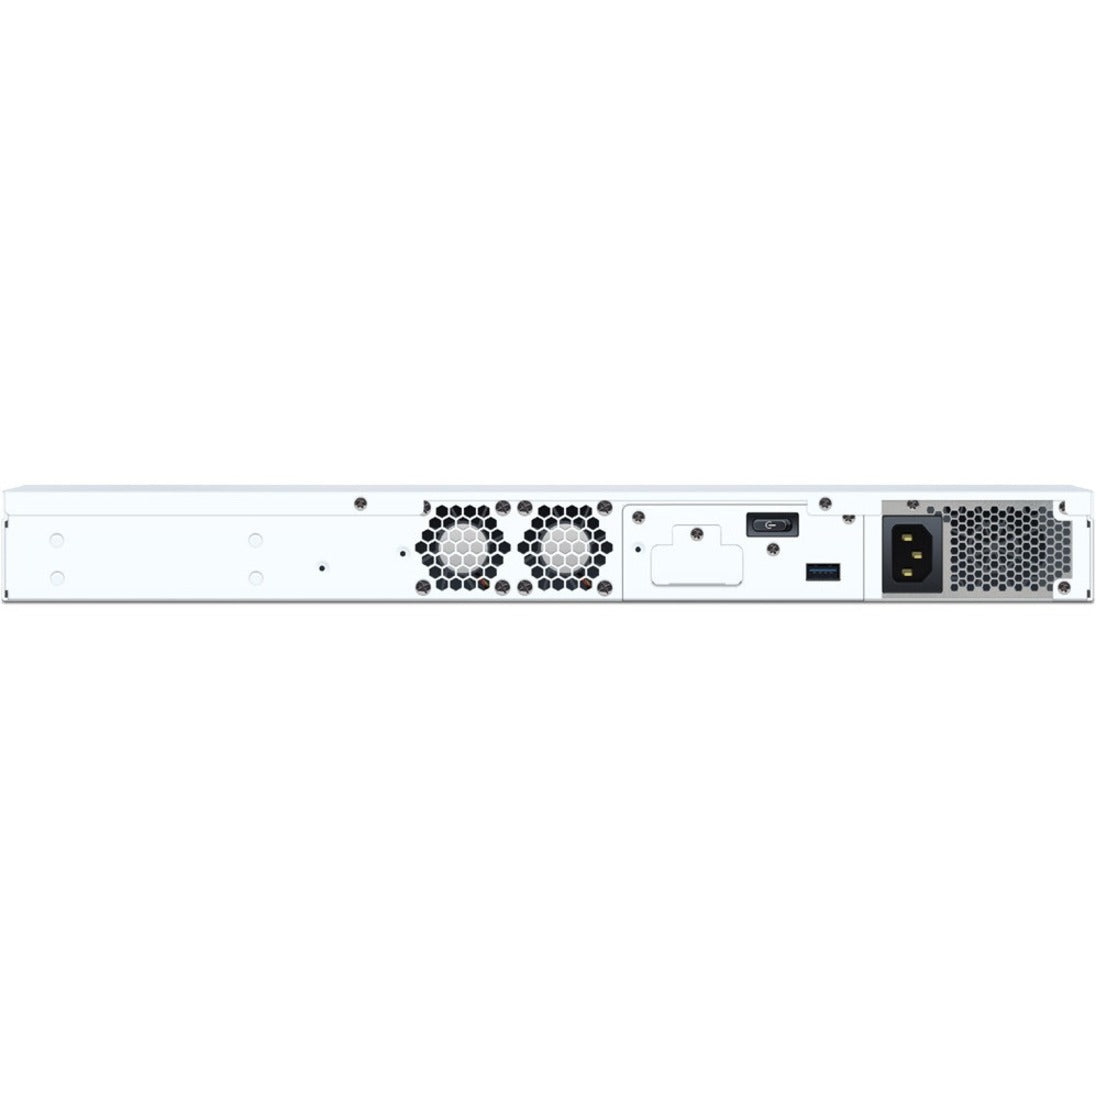 Sophos XGS 2300 Network Security/Firewall Appliance